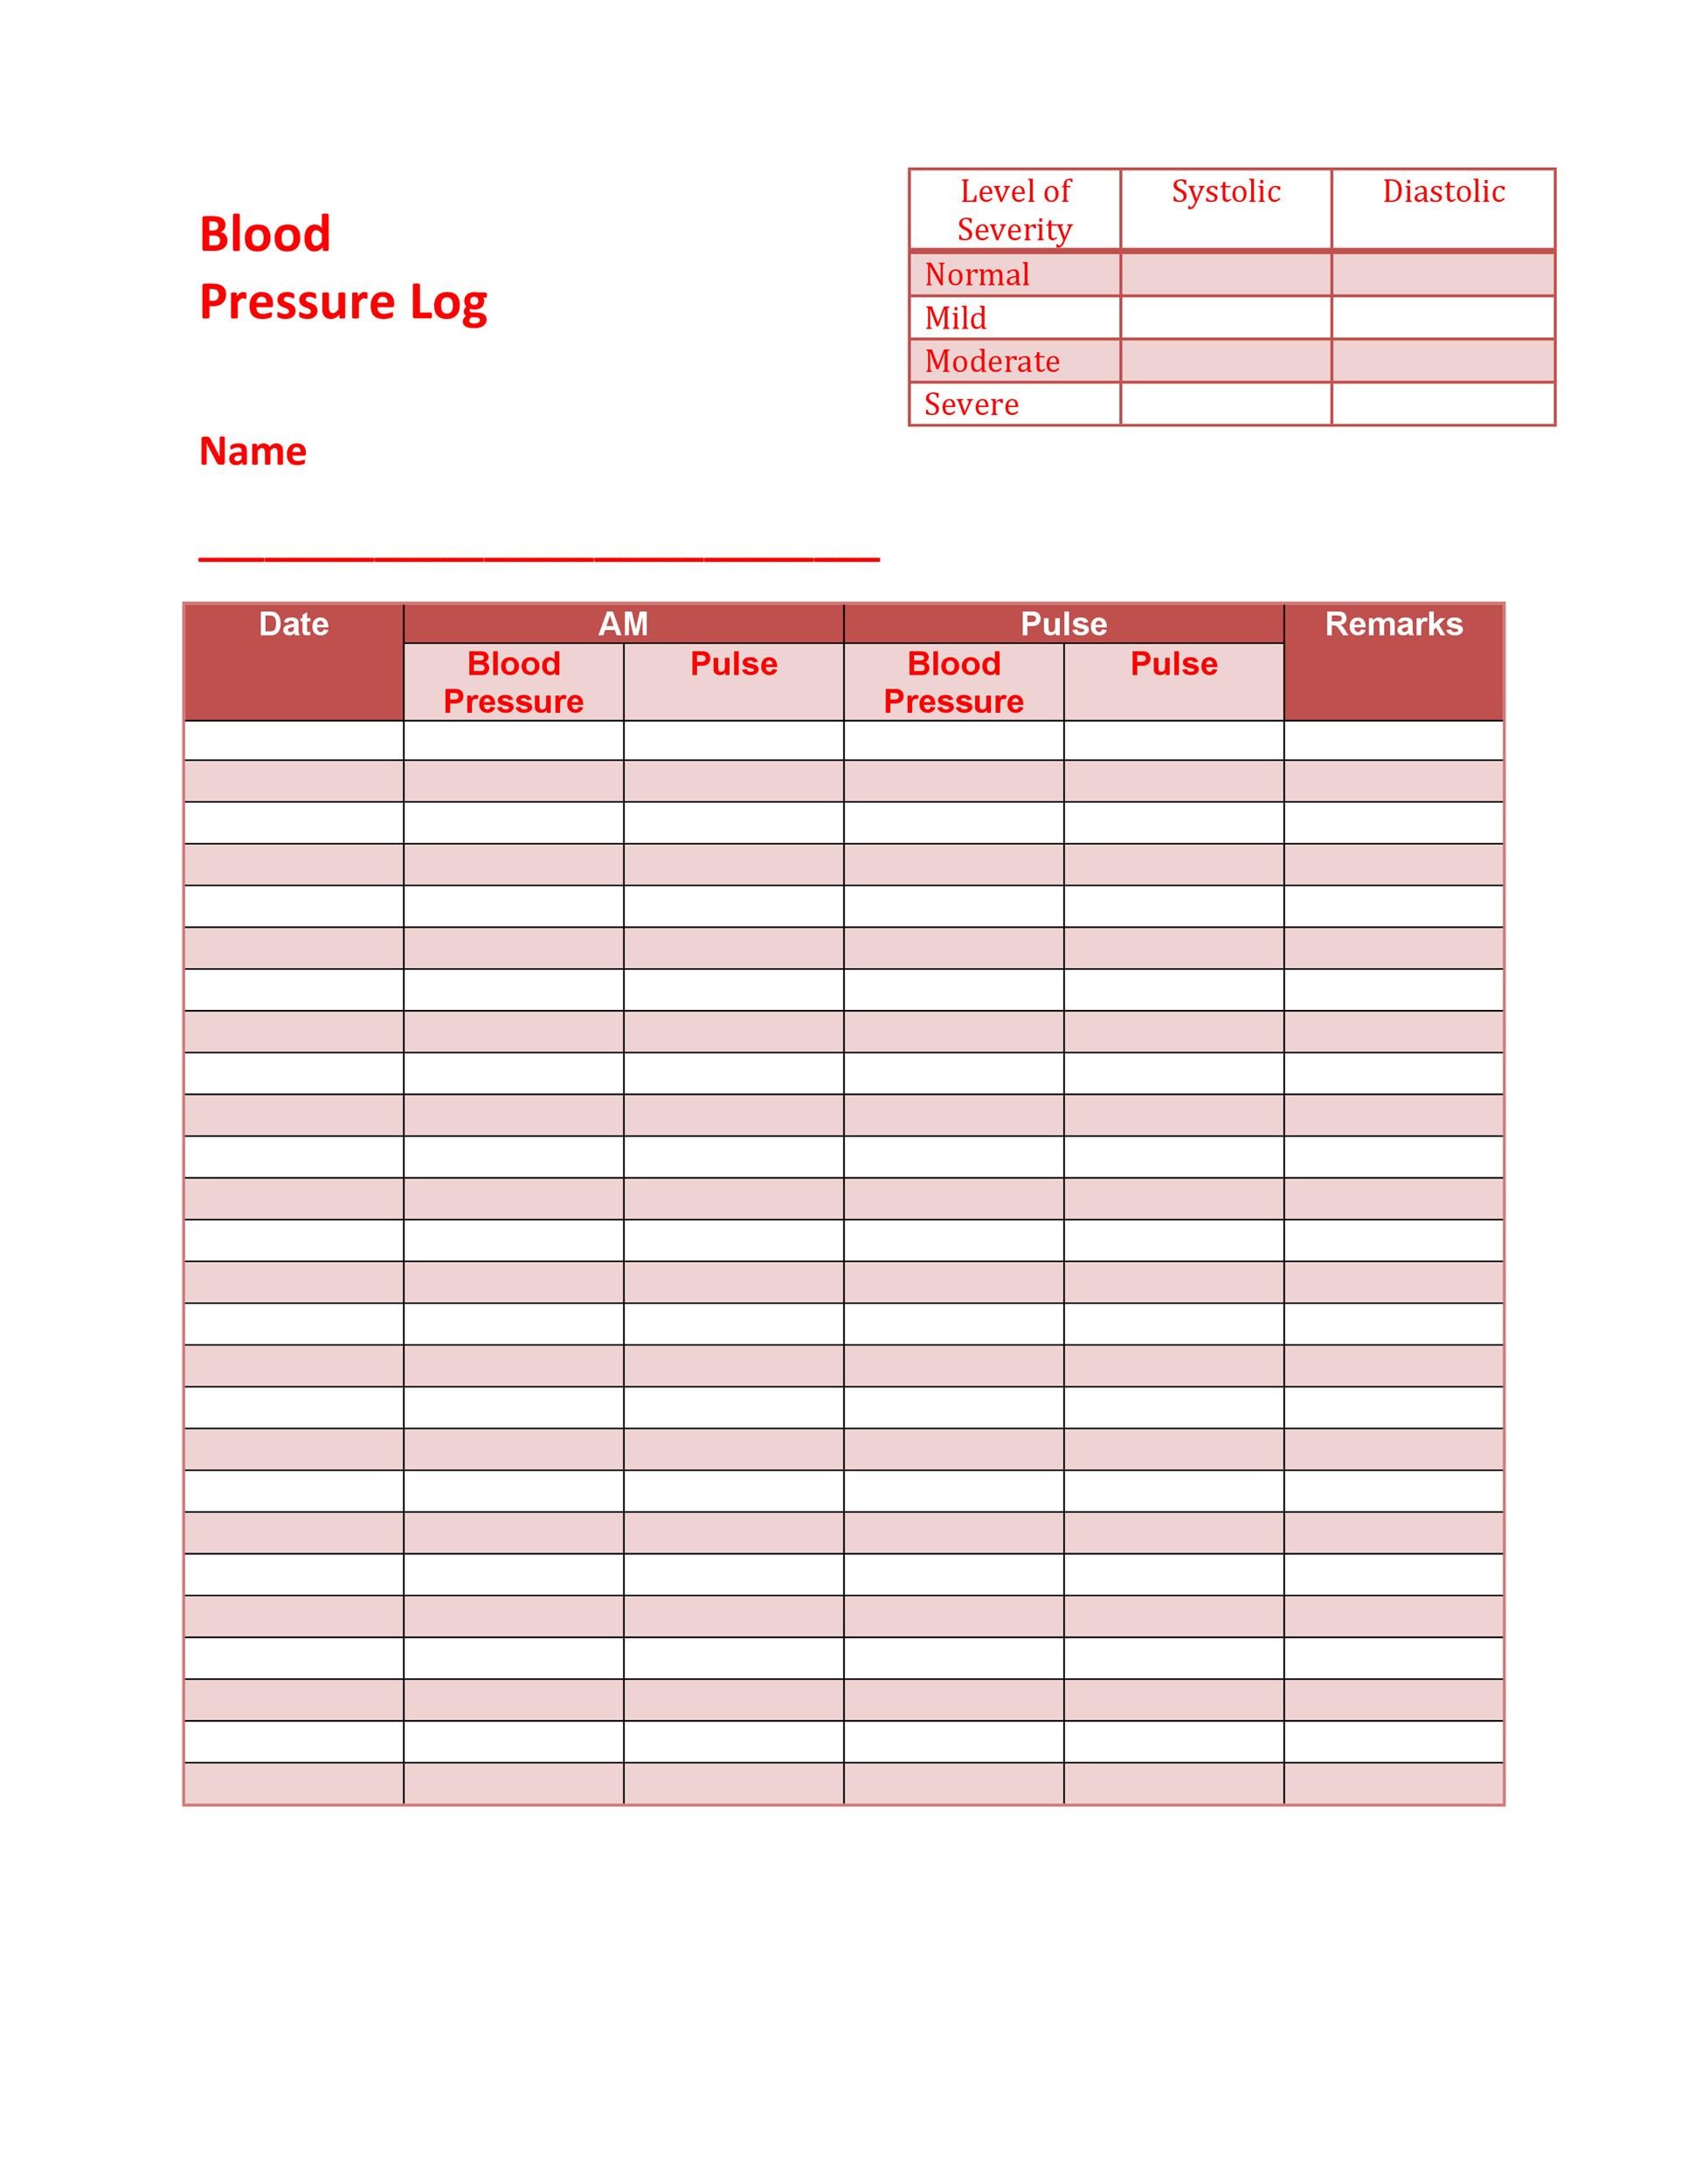  Blood pressure log template excel